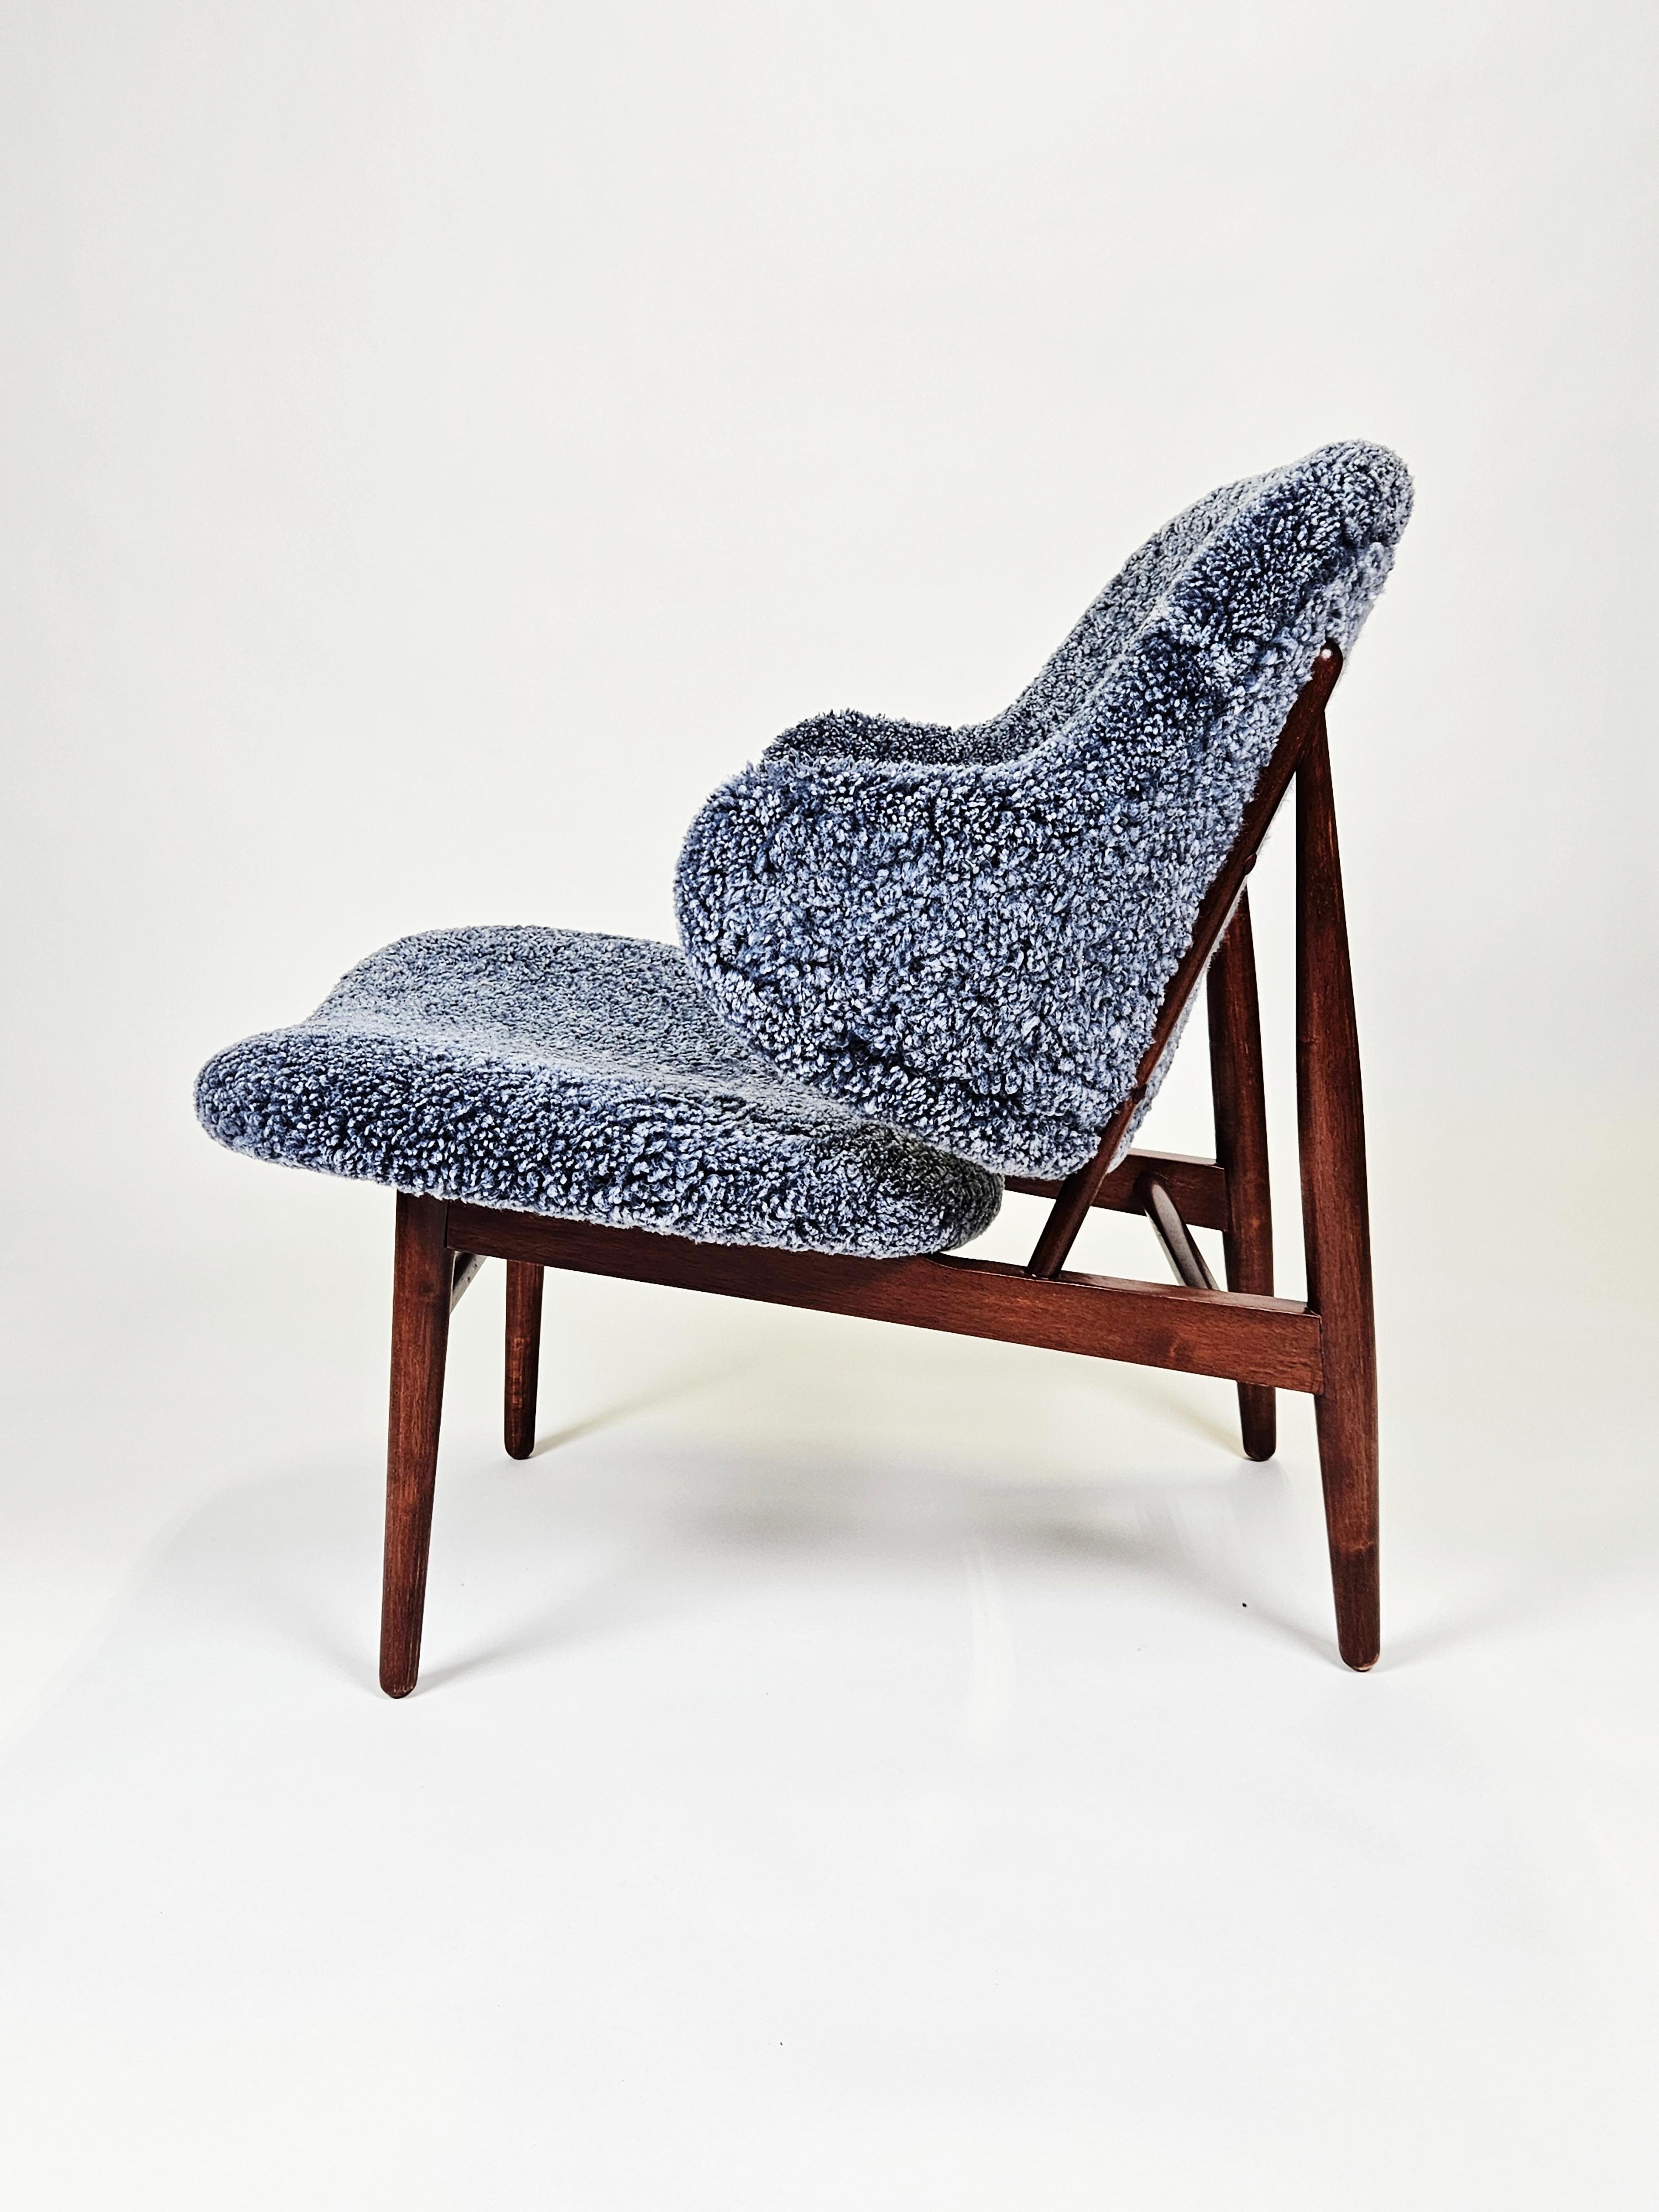 20th Century Rare Scandinavian Modern shell chair by IB Kofod Larsen, Denmark, 1950s For Sale